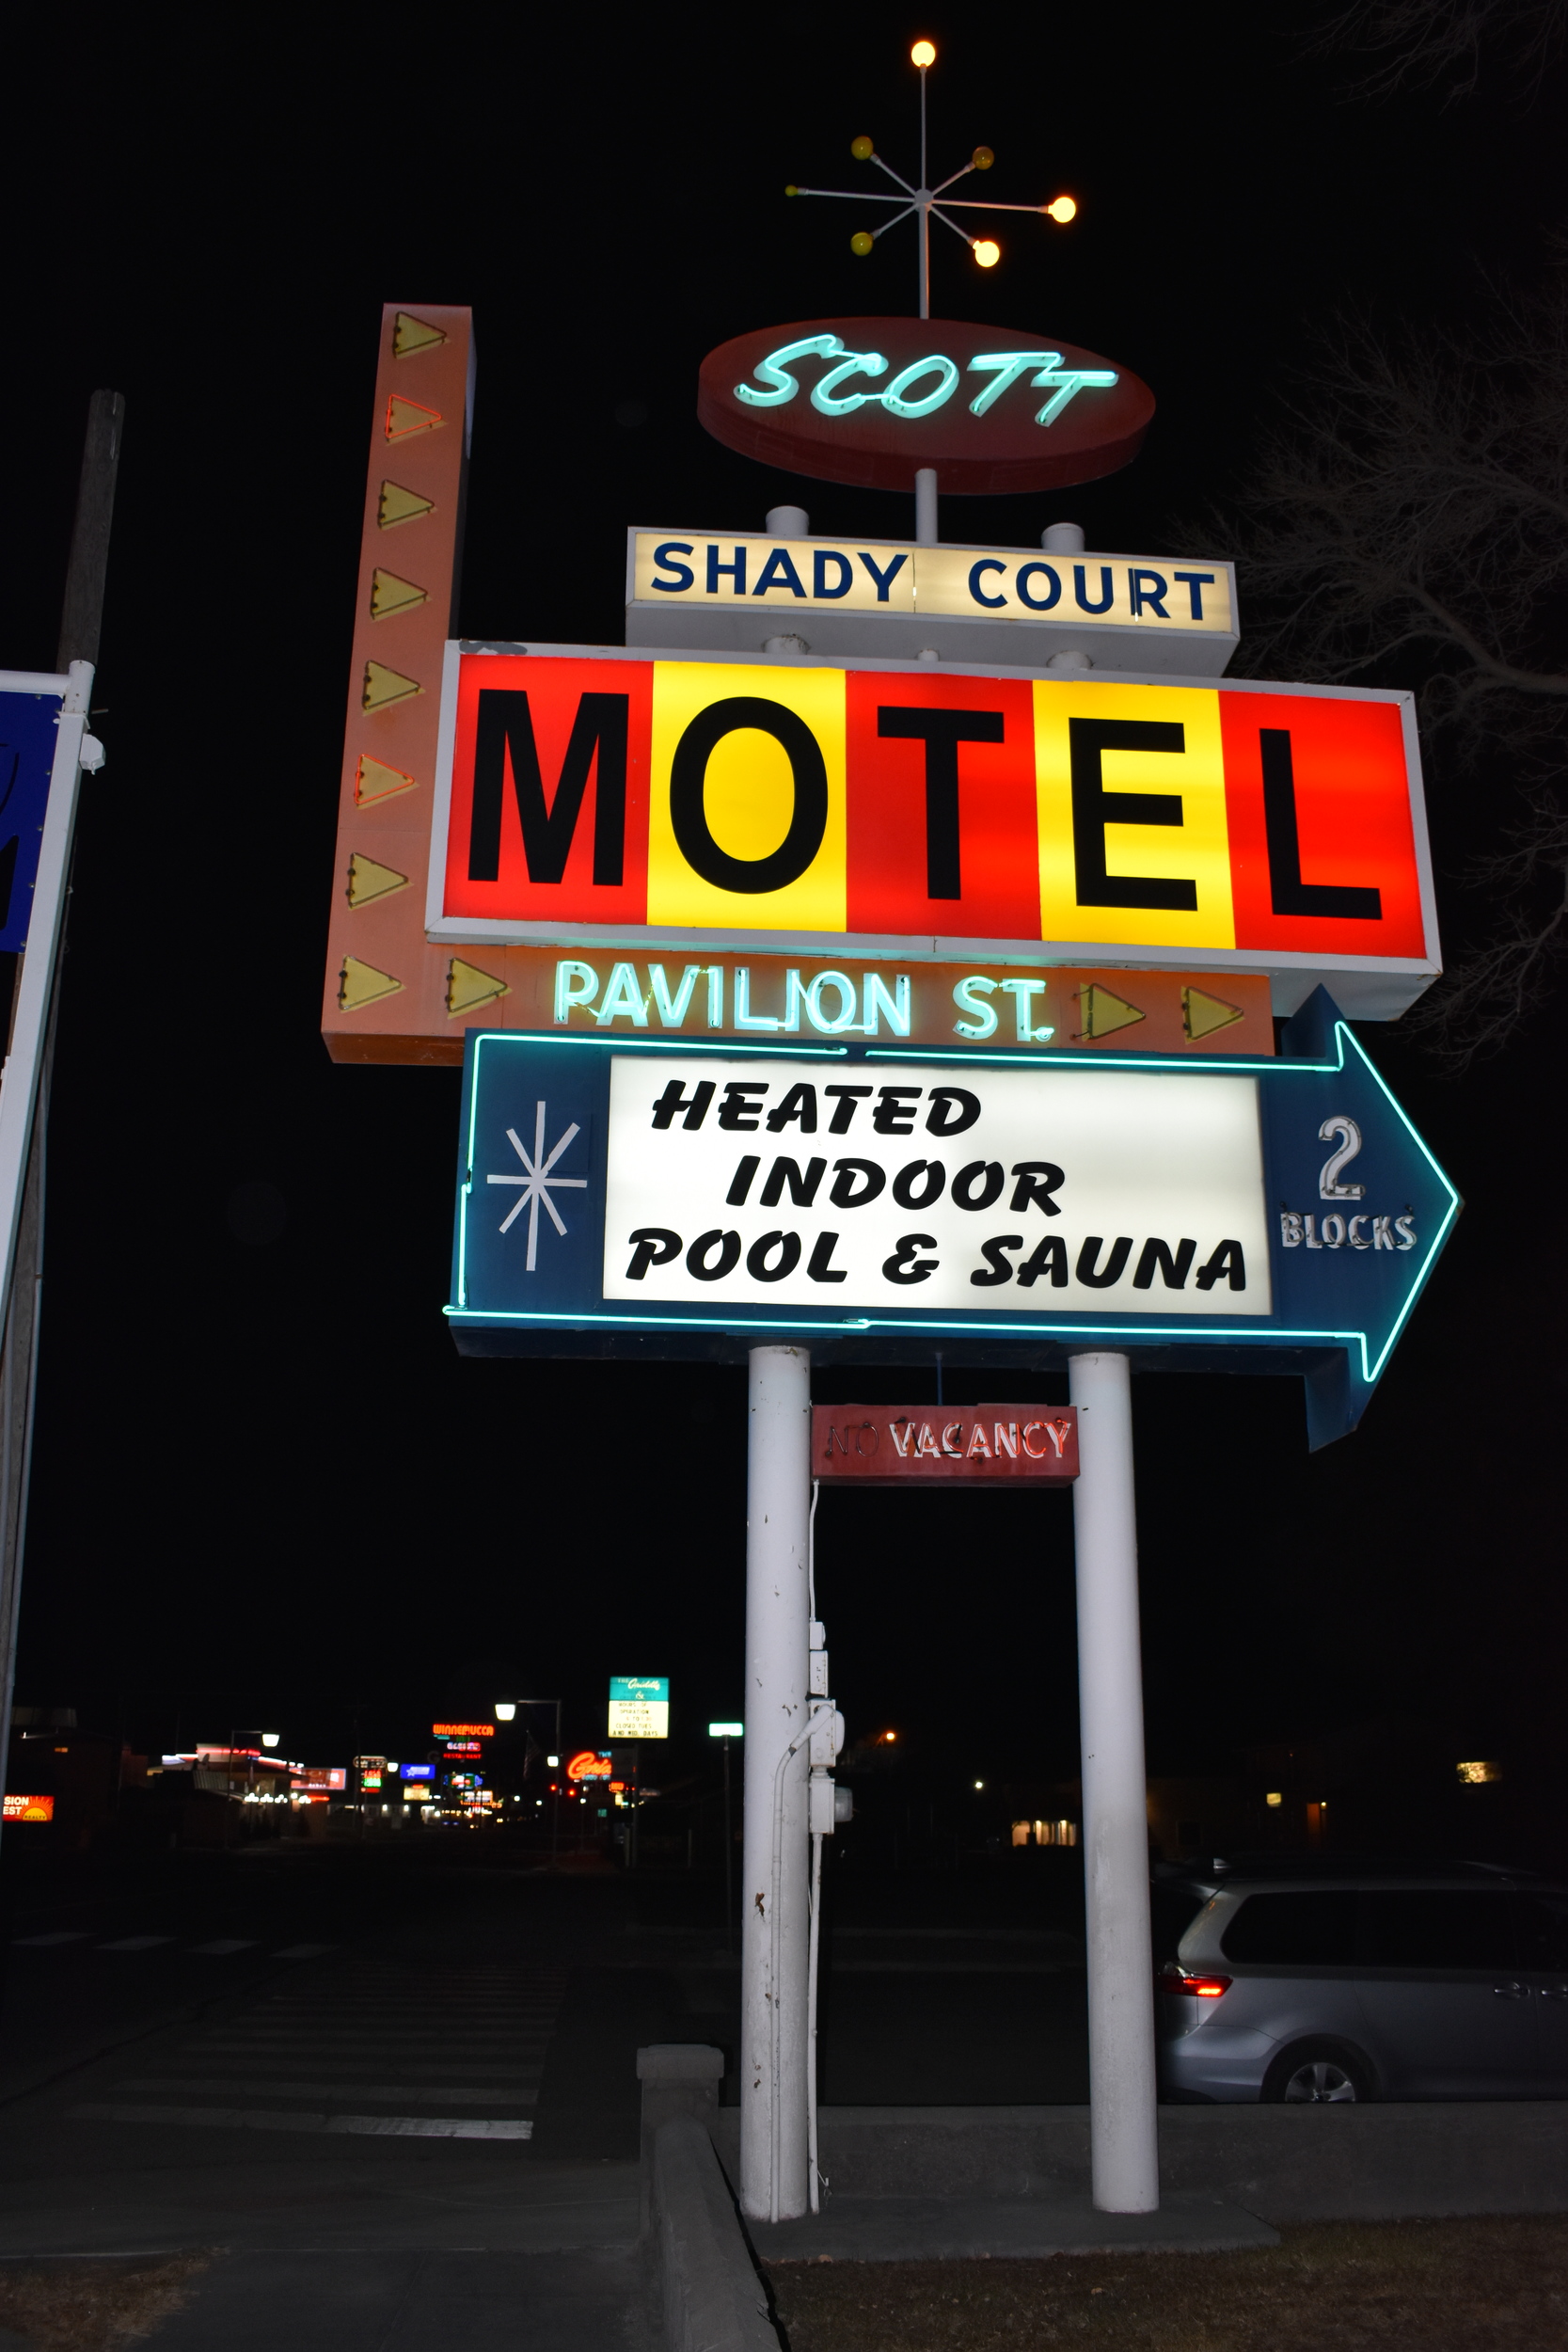 Scott Shady Court Motel double mounted sign, Winnemucca, Nevada